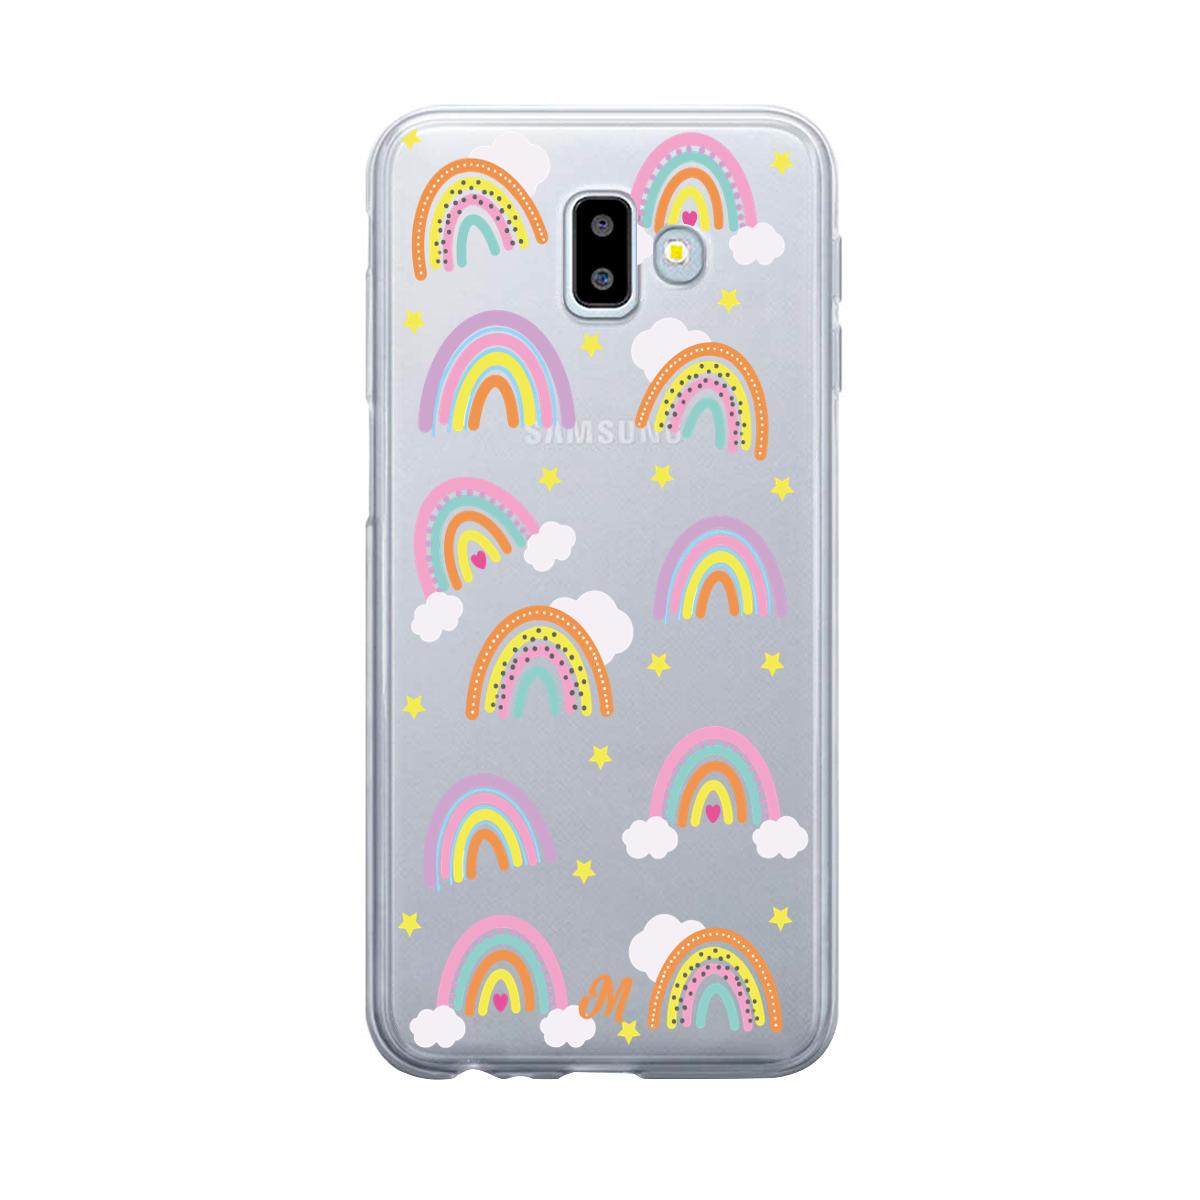 Case para Samsung J6 Plus Fiesta arcoíris - Mandala Cases